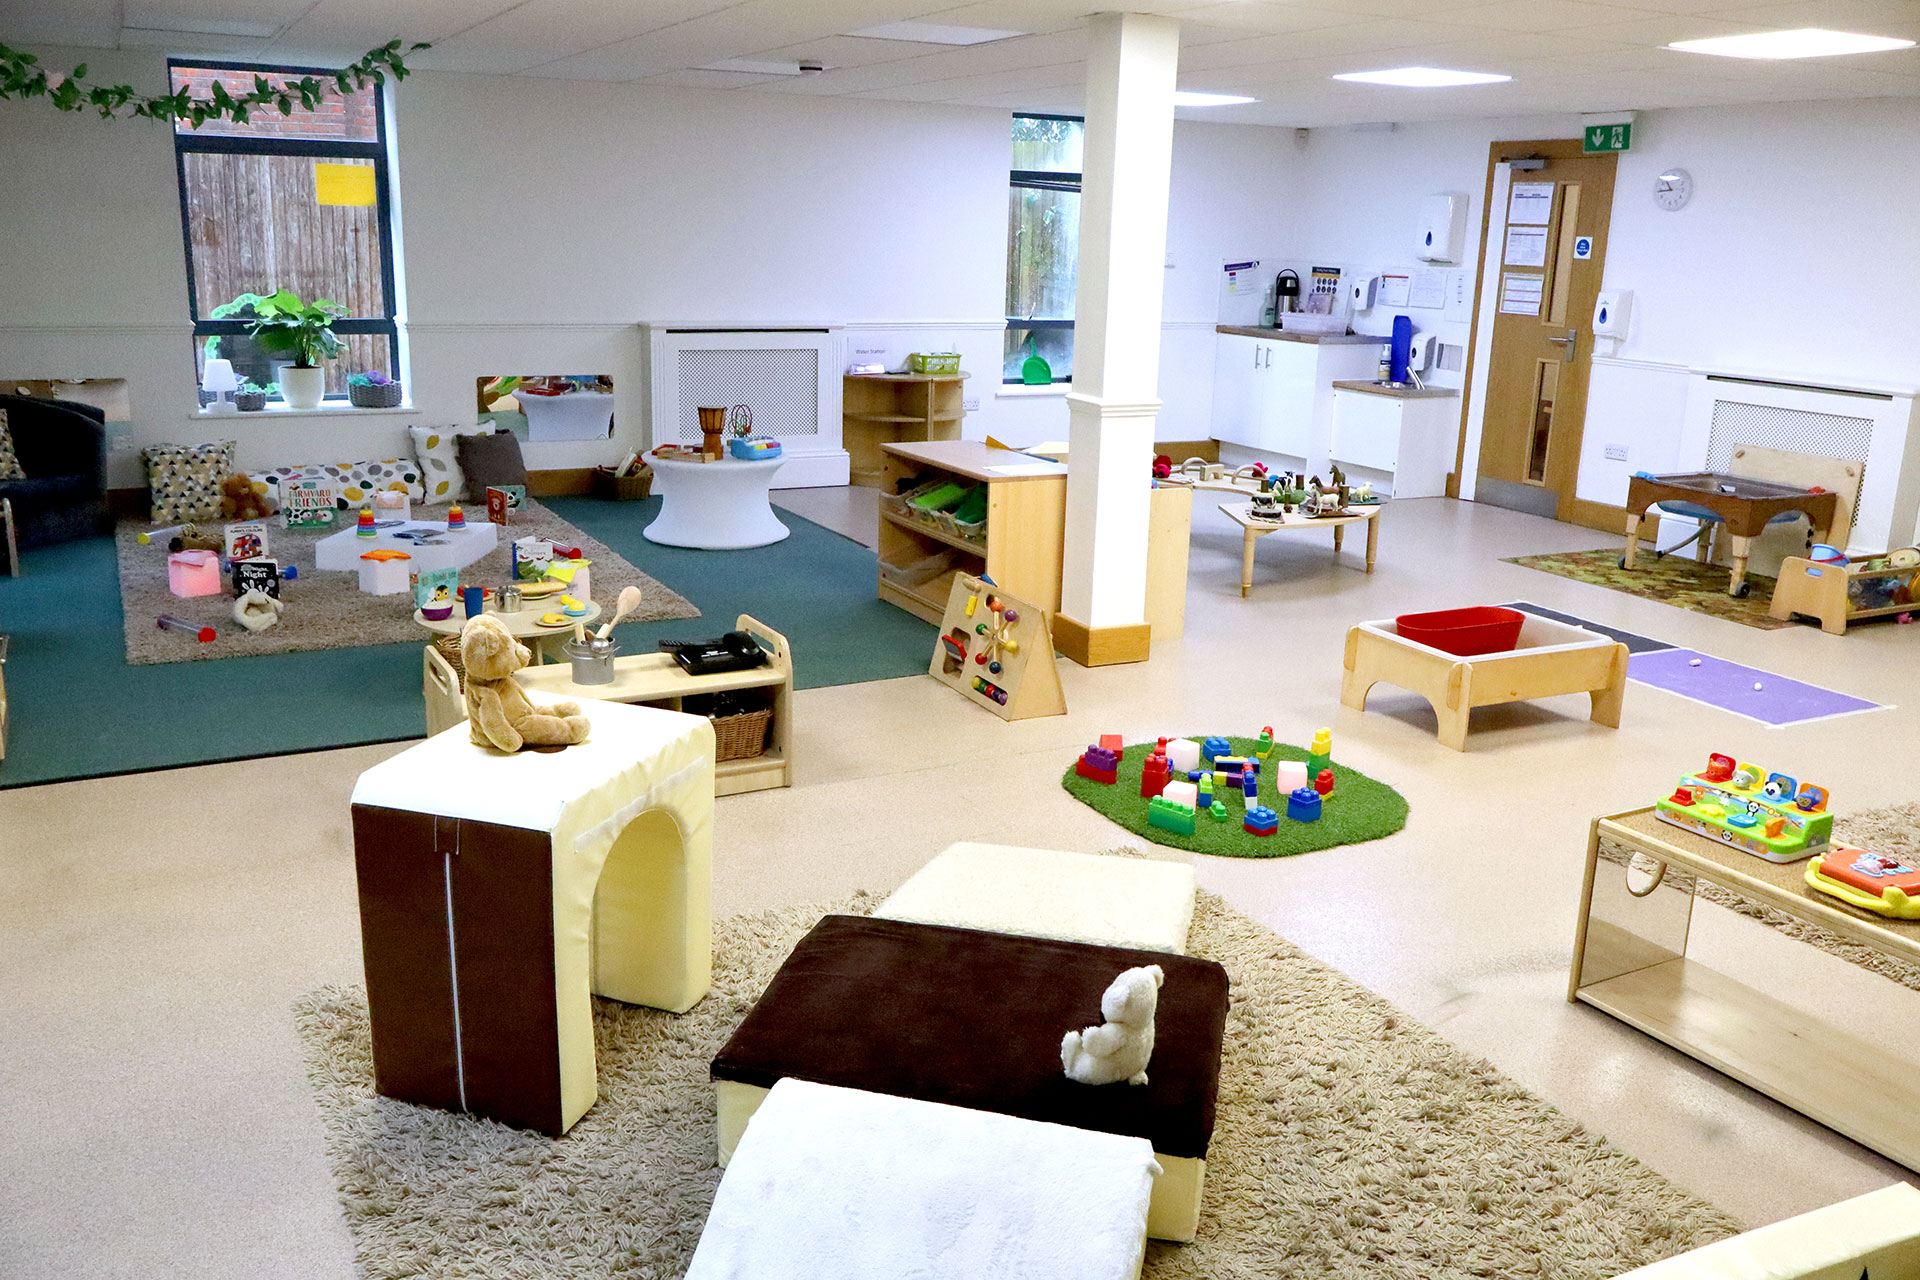 Chantry Hall Day Nursery and Preschool